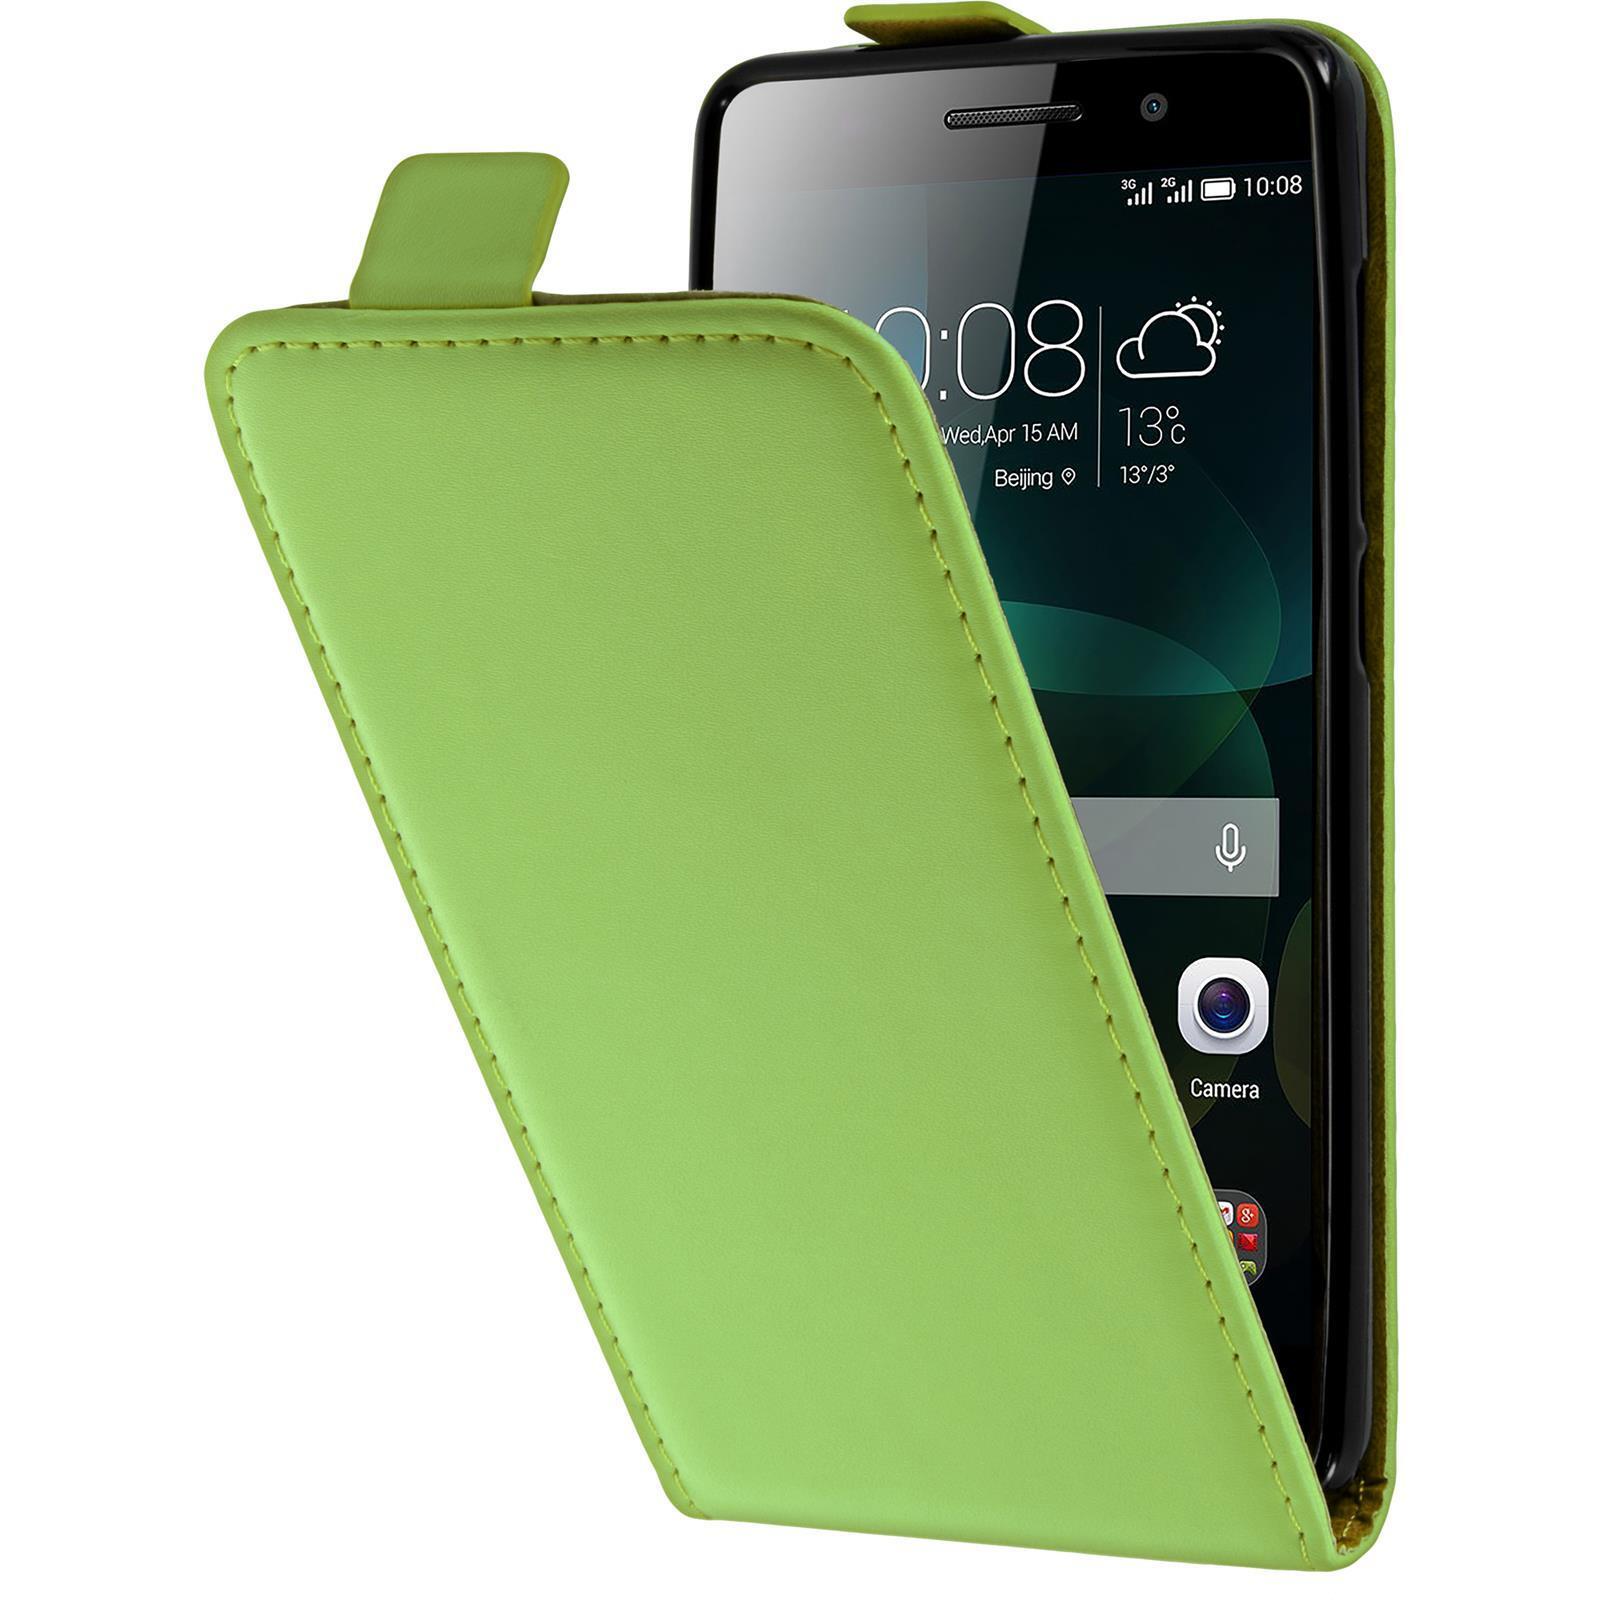 Kapper impuls bijzonder Faux leather cover for Huawei Honor 4c Flip Case Green +2 Protector  4251156922685 | eBay